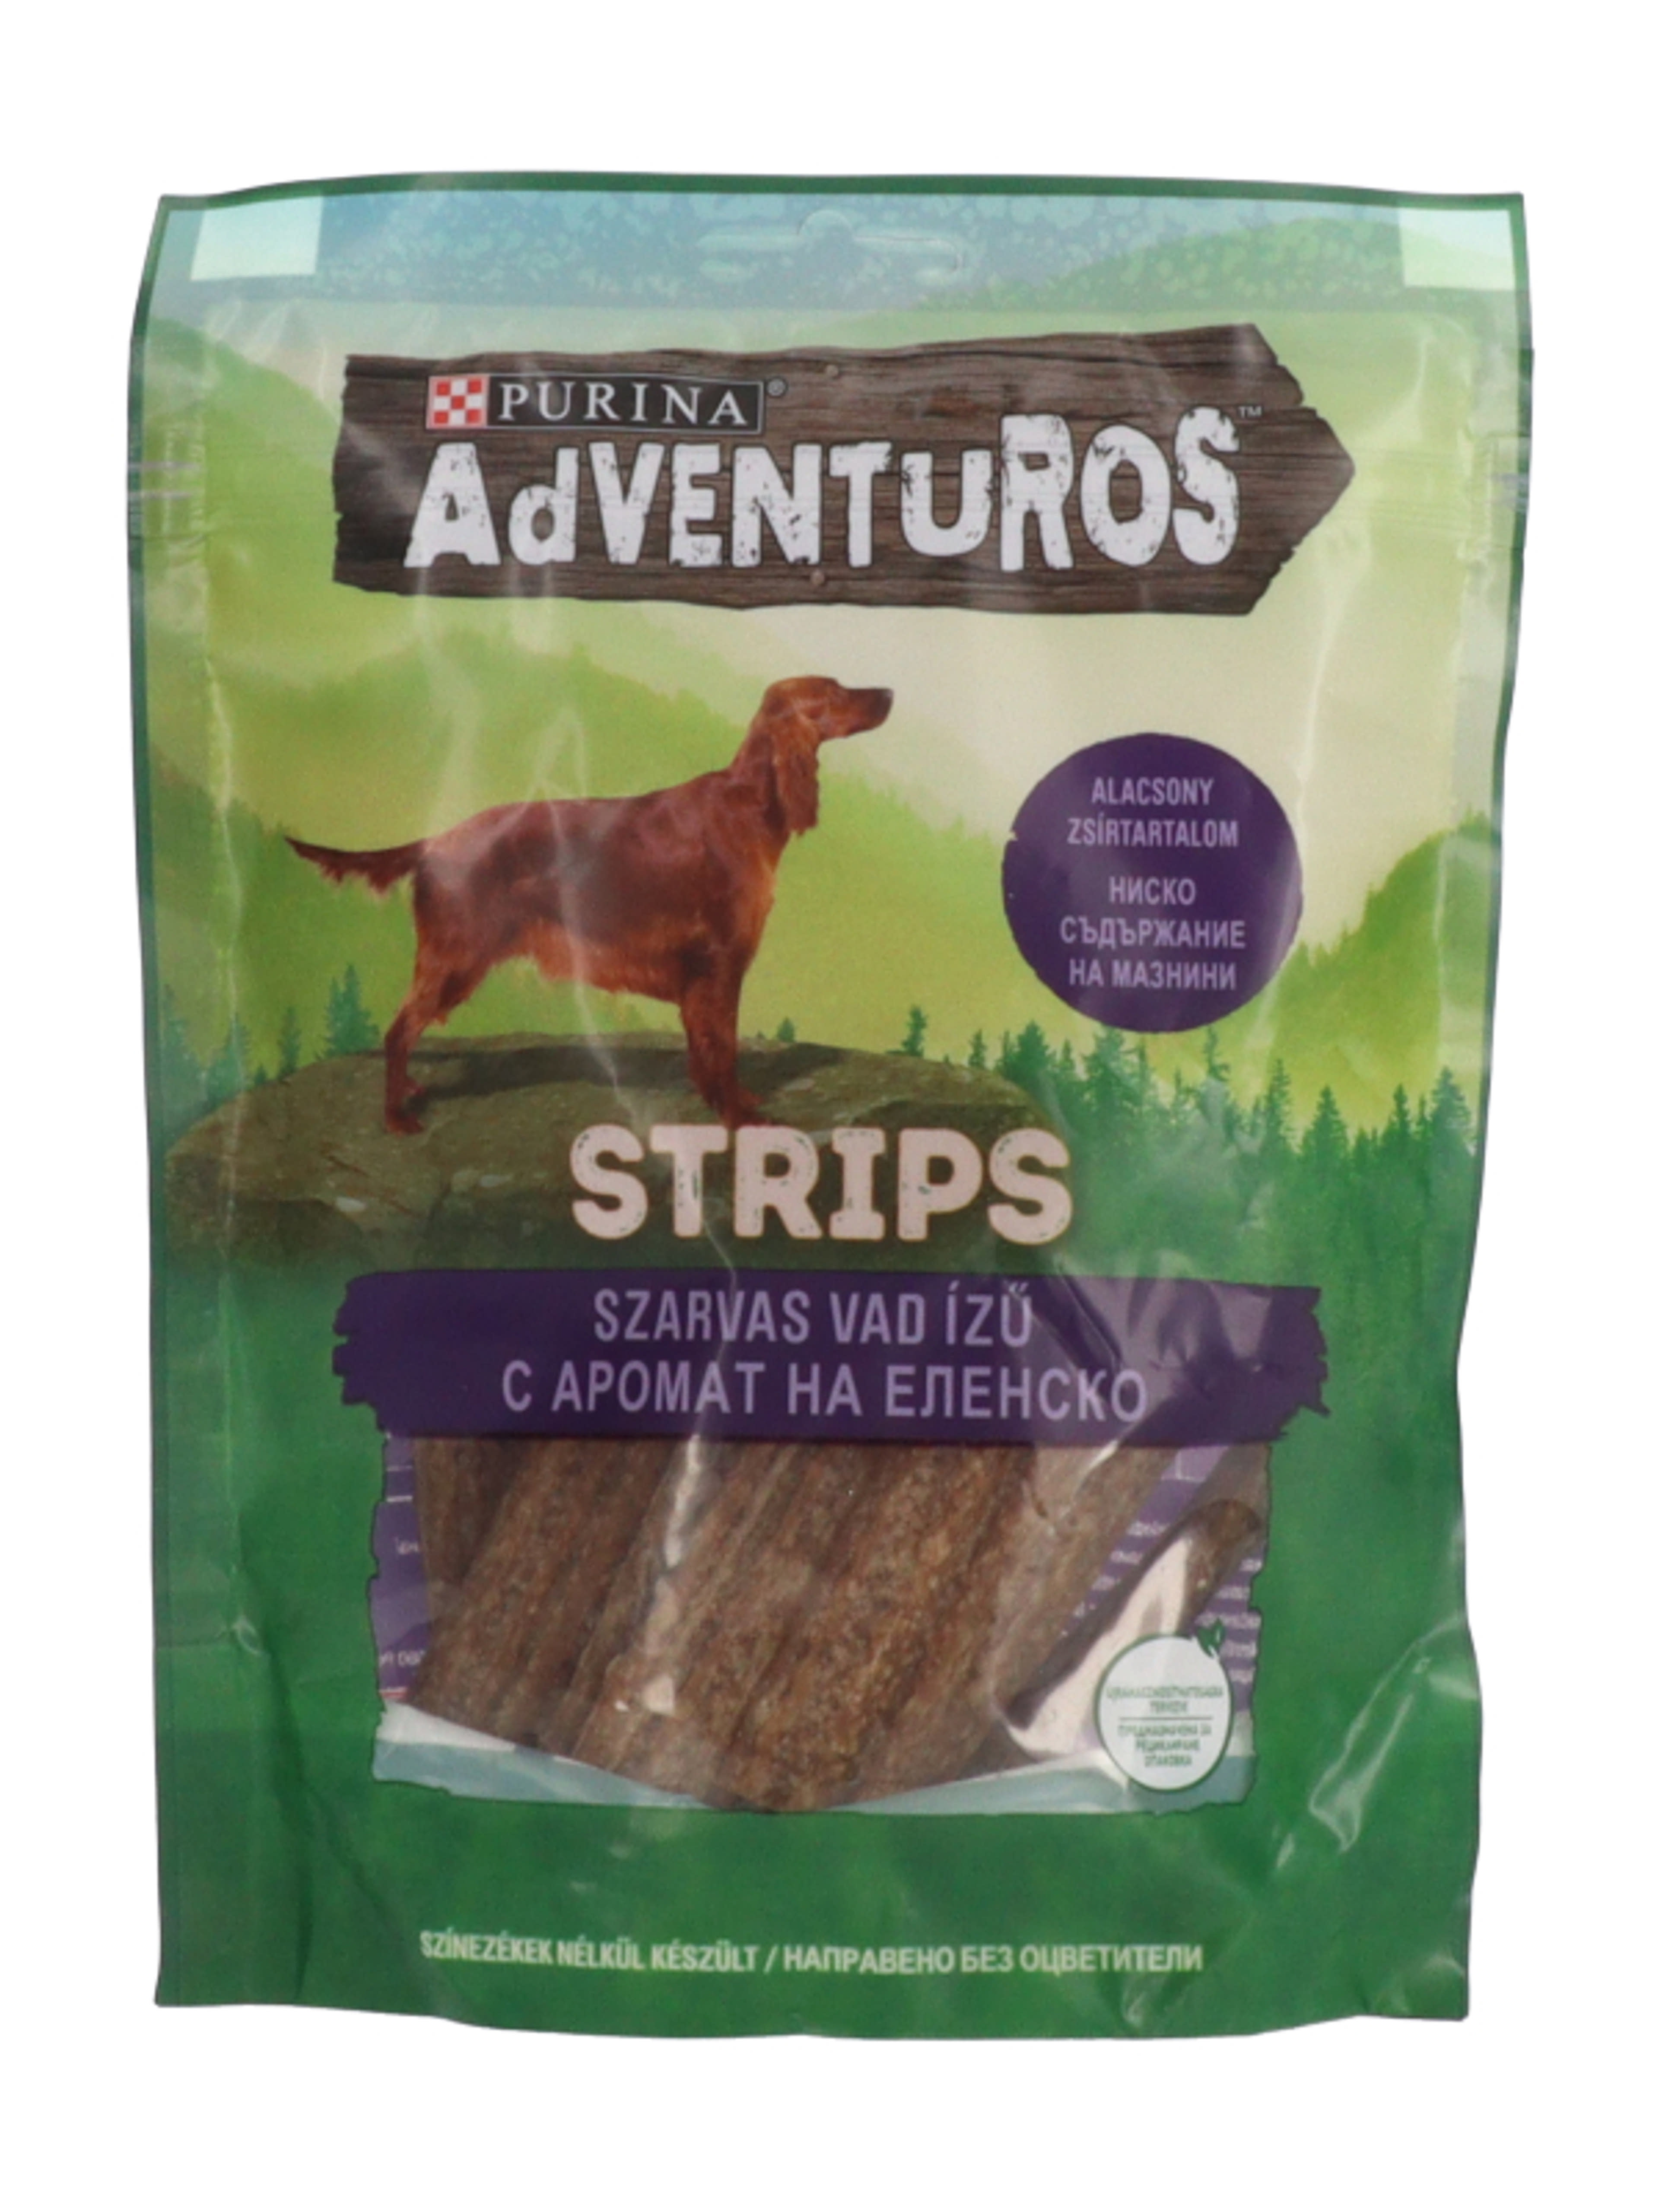 Purina Adventuros jutalomfalat kutyáknak, szarvas, vad ízű - 90 g-5